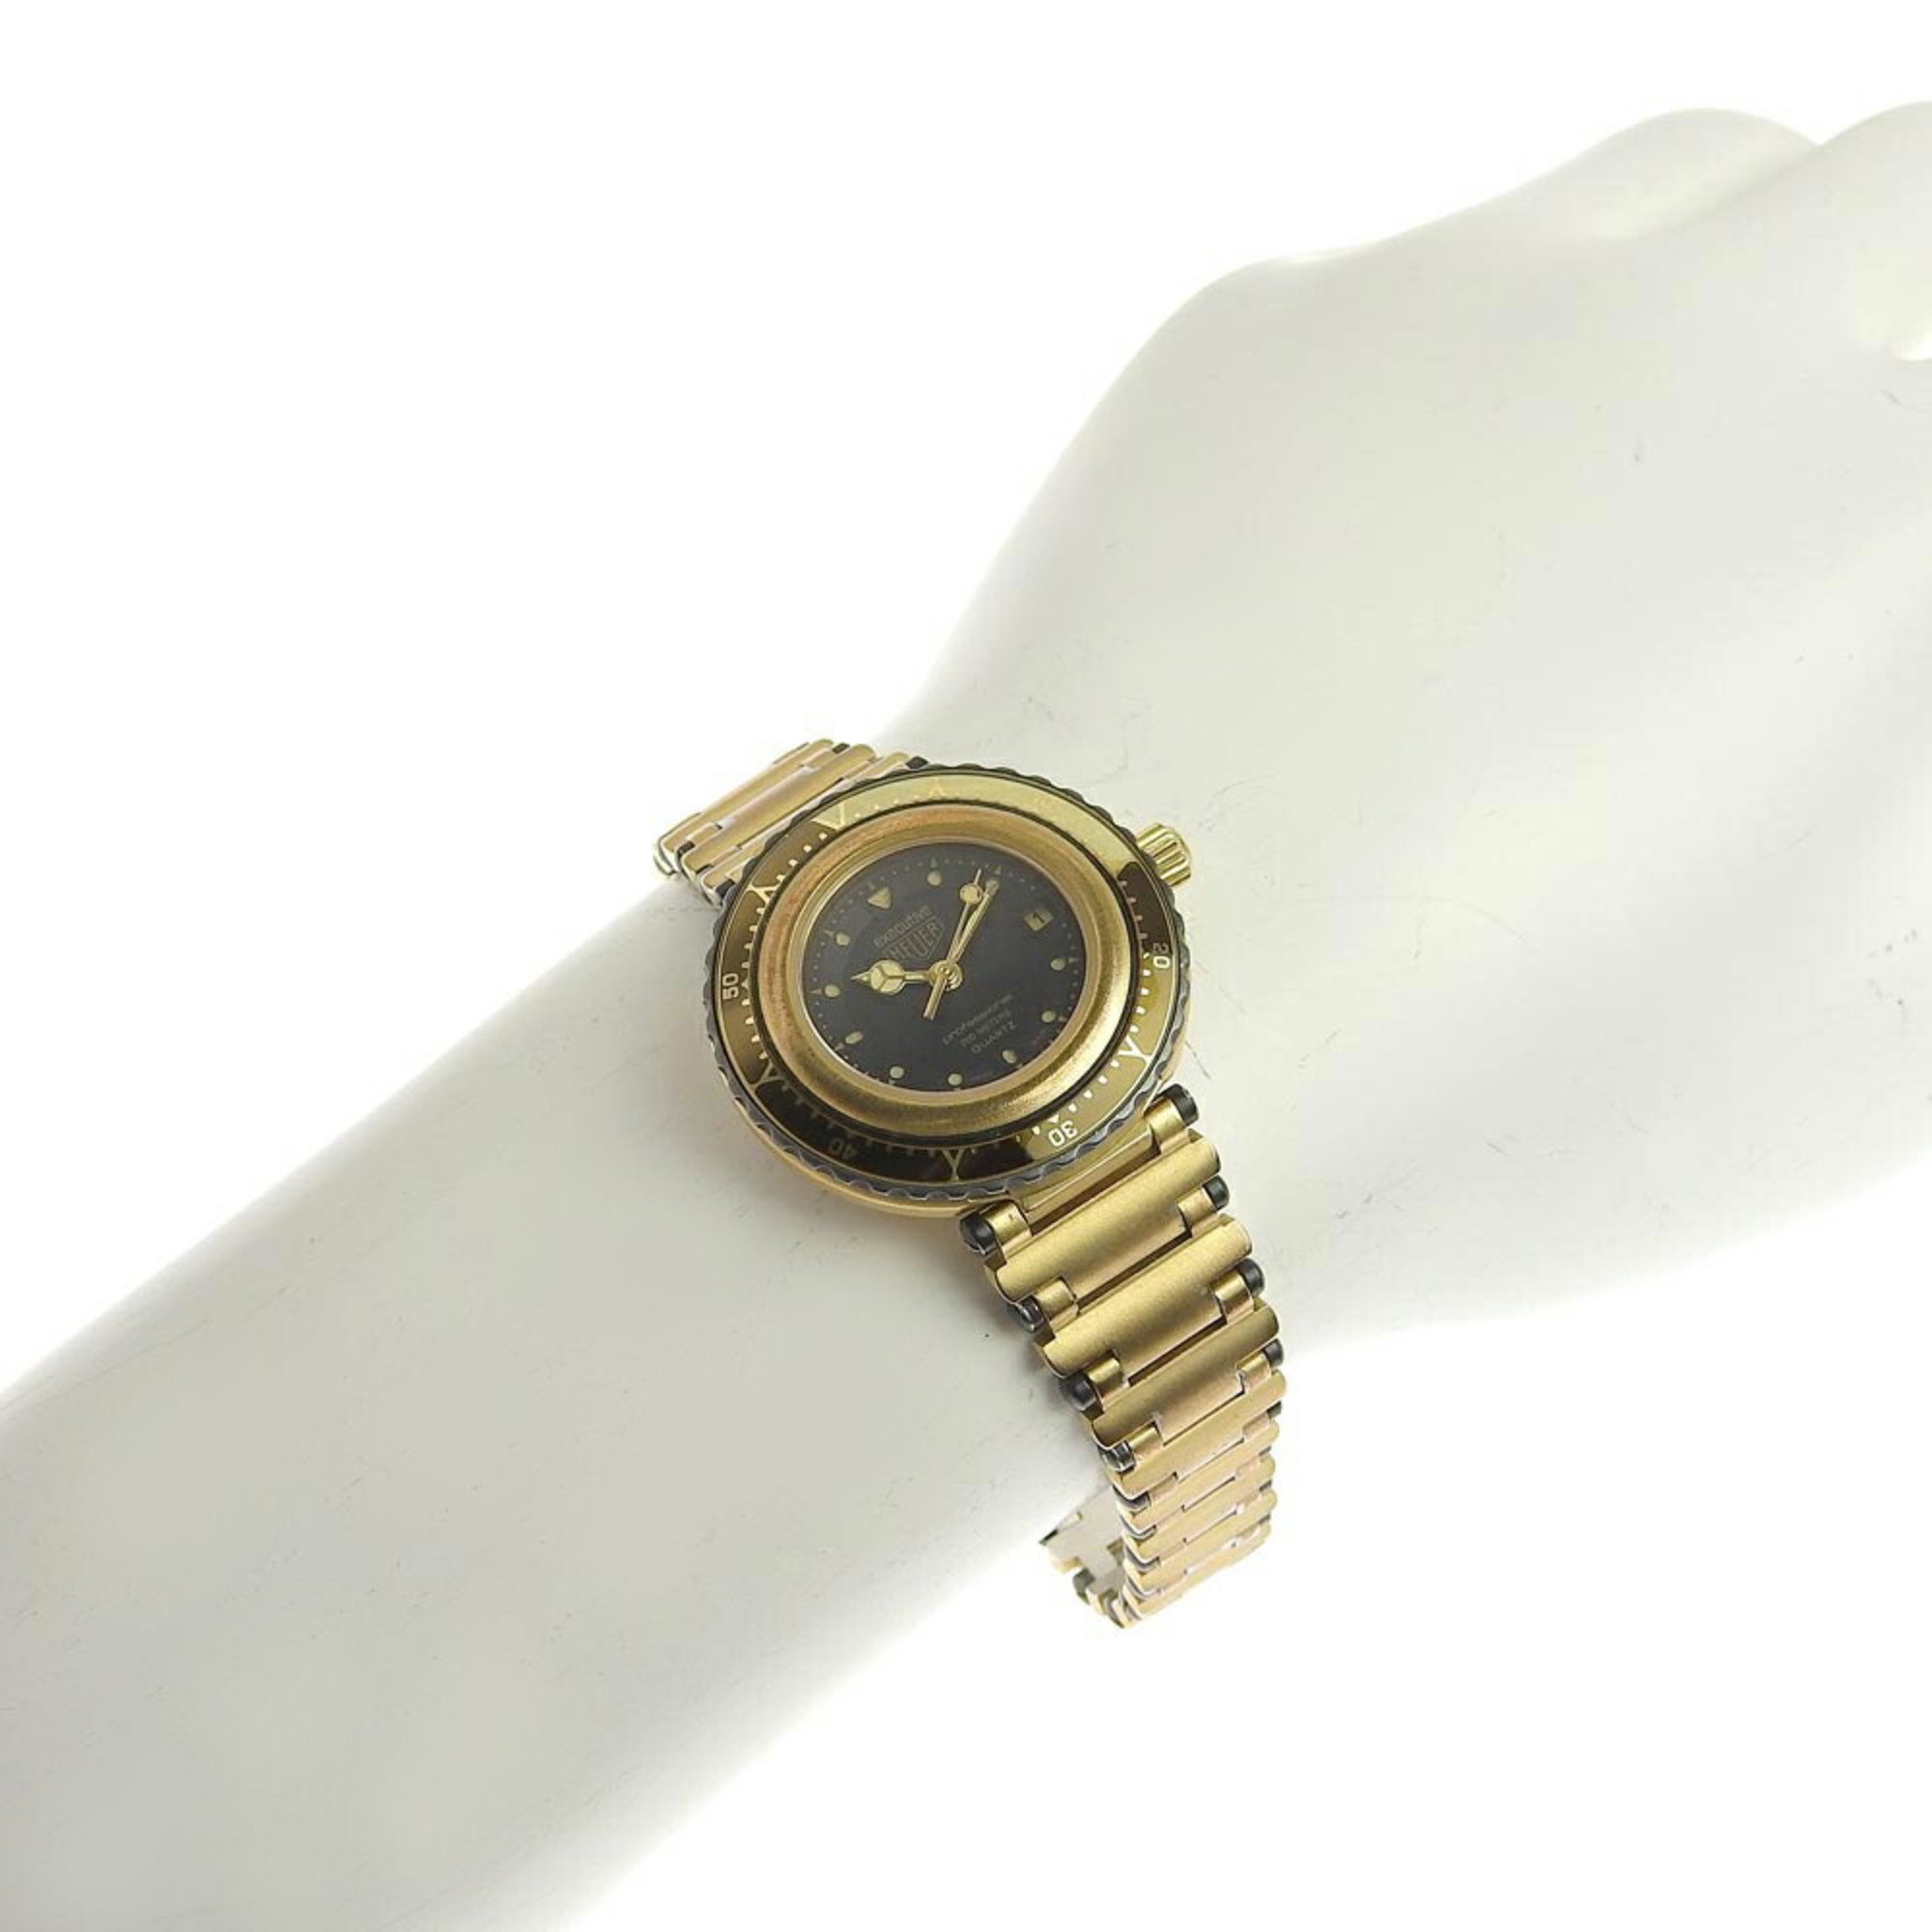 Tag Heuer TAG HEUER executive lady's quartz wristwatch 914 308 antique